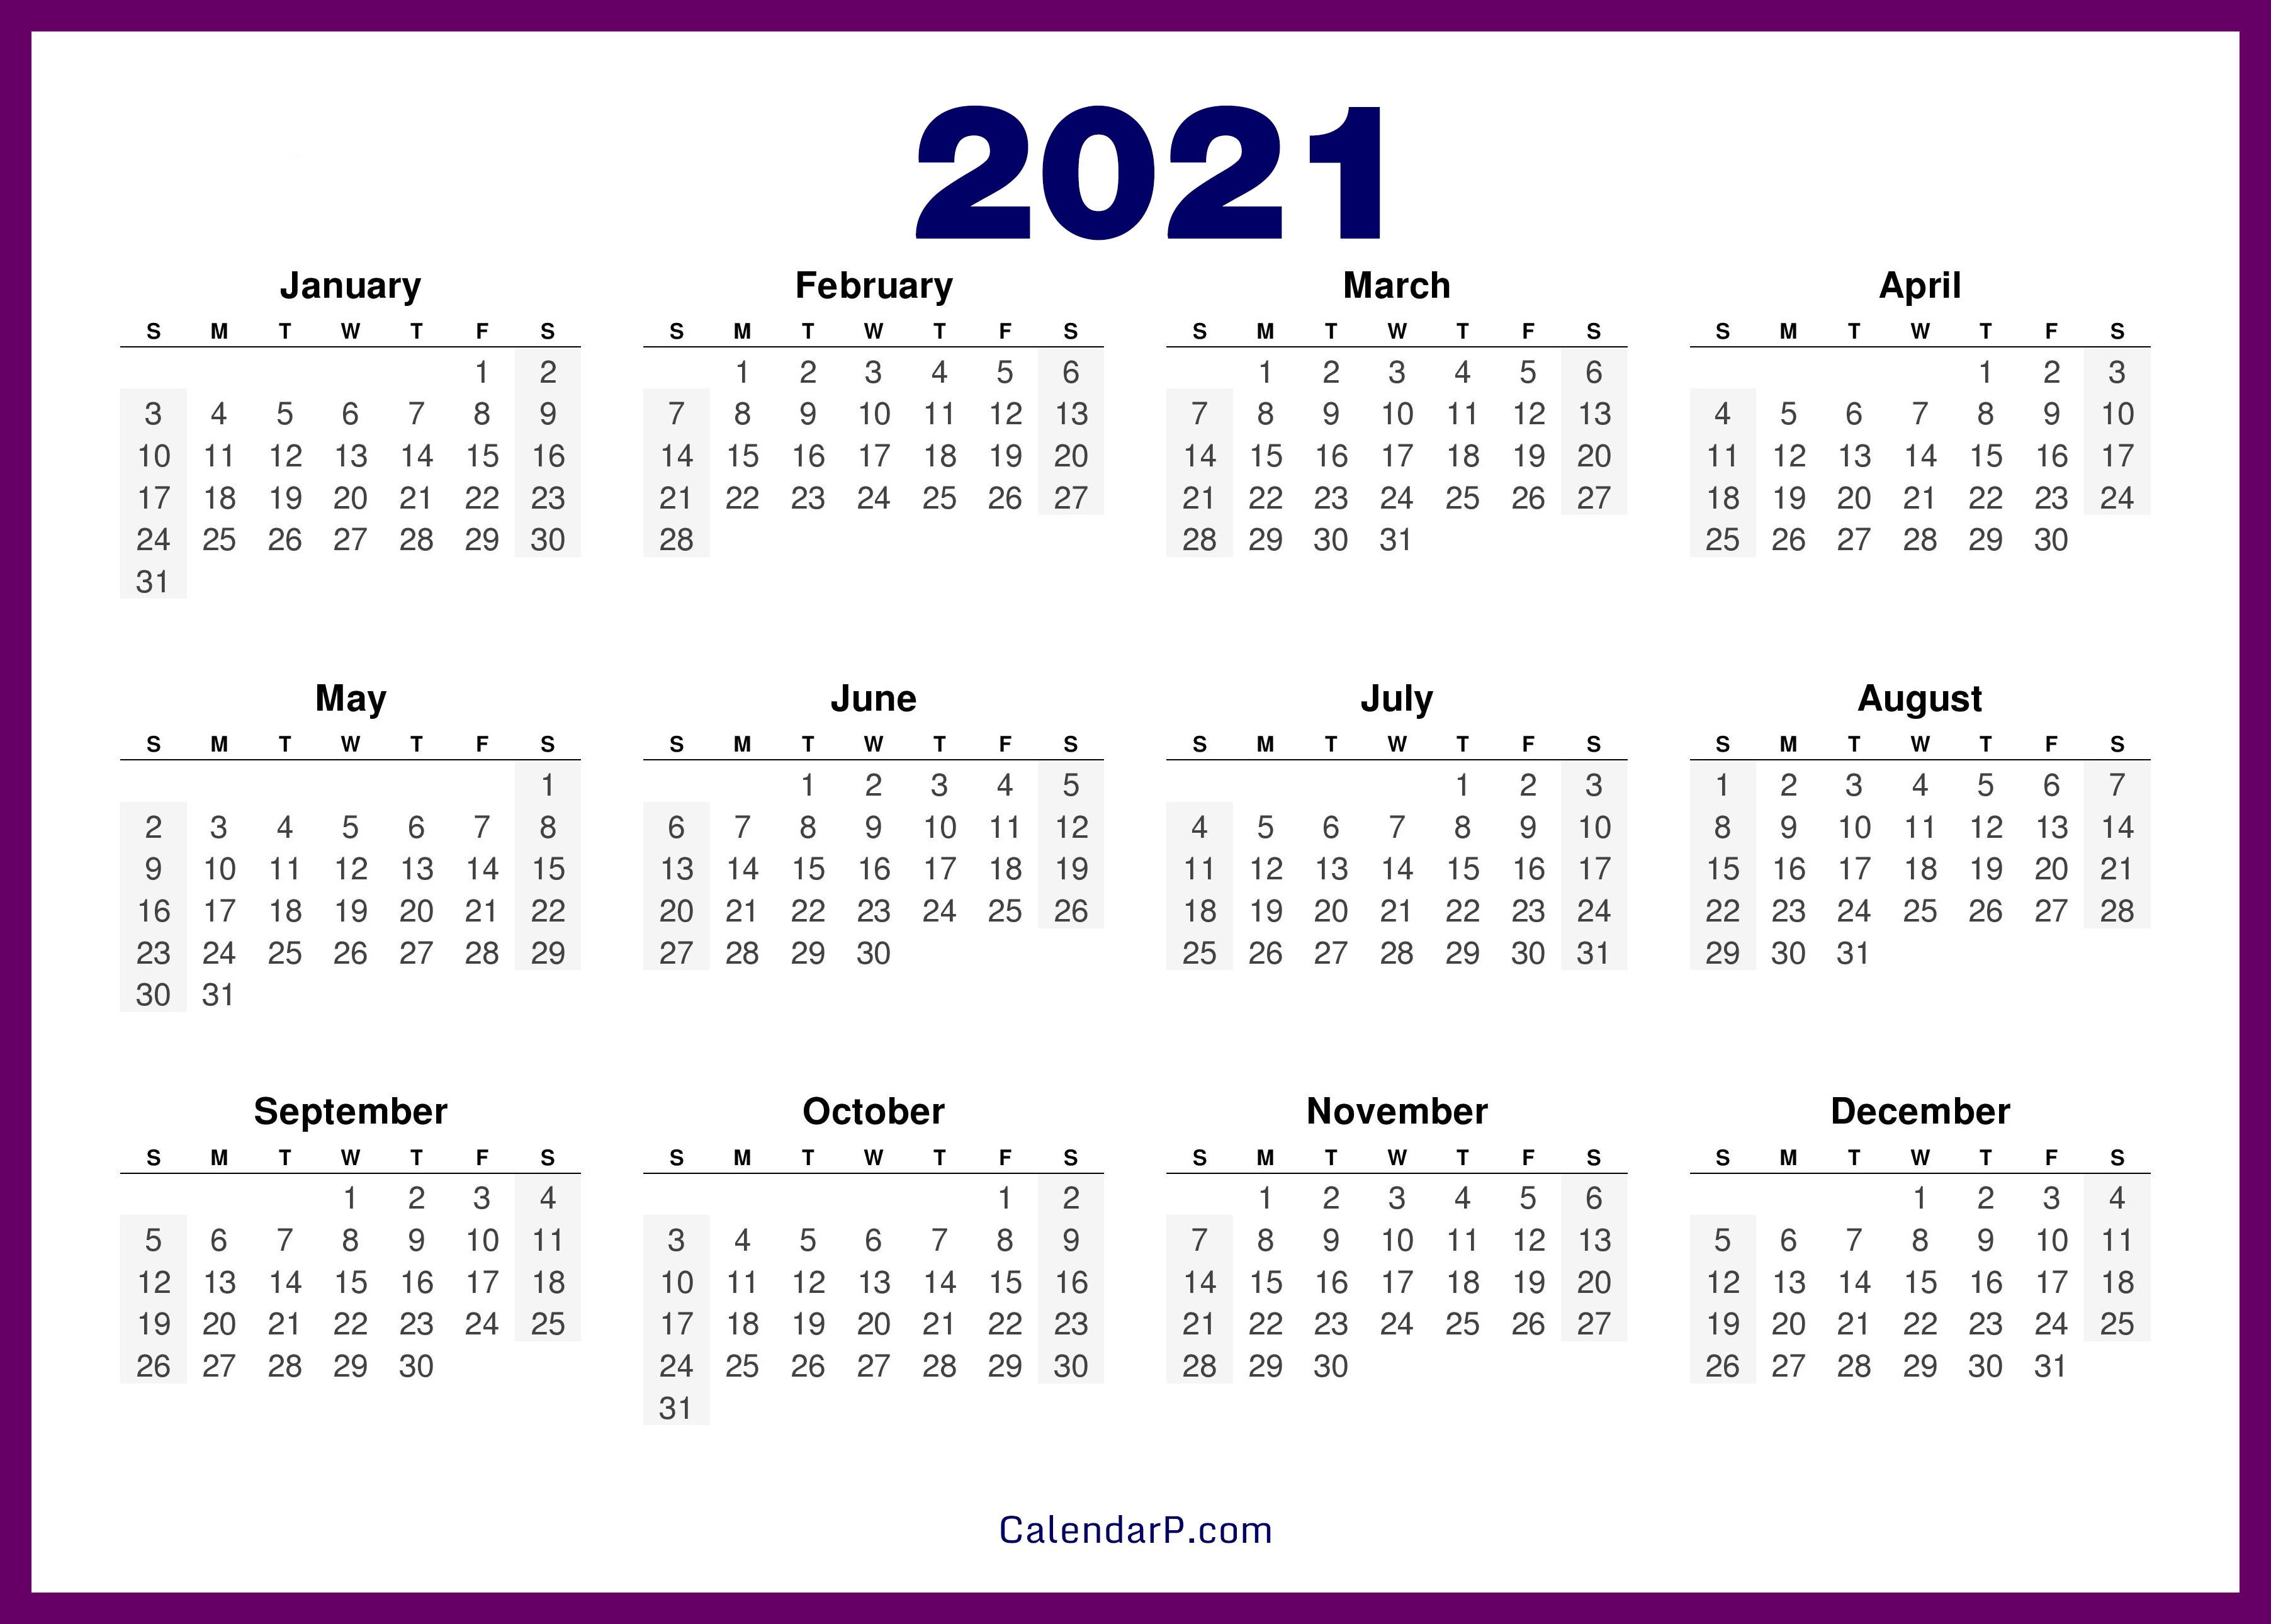 '#2021 calendar printable' แฮชแท็ก ThaiPhotos: 21 ภาพ